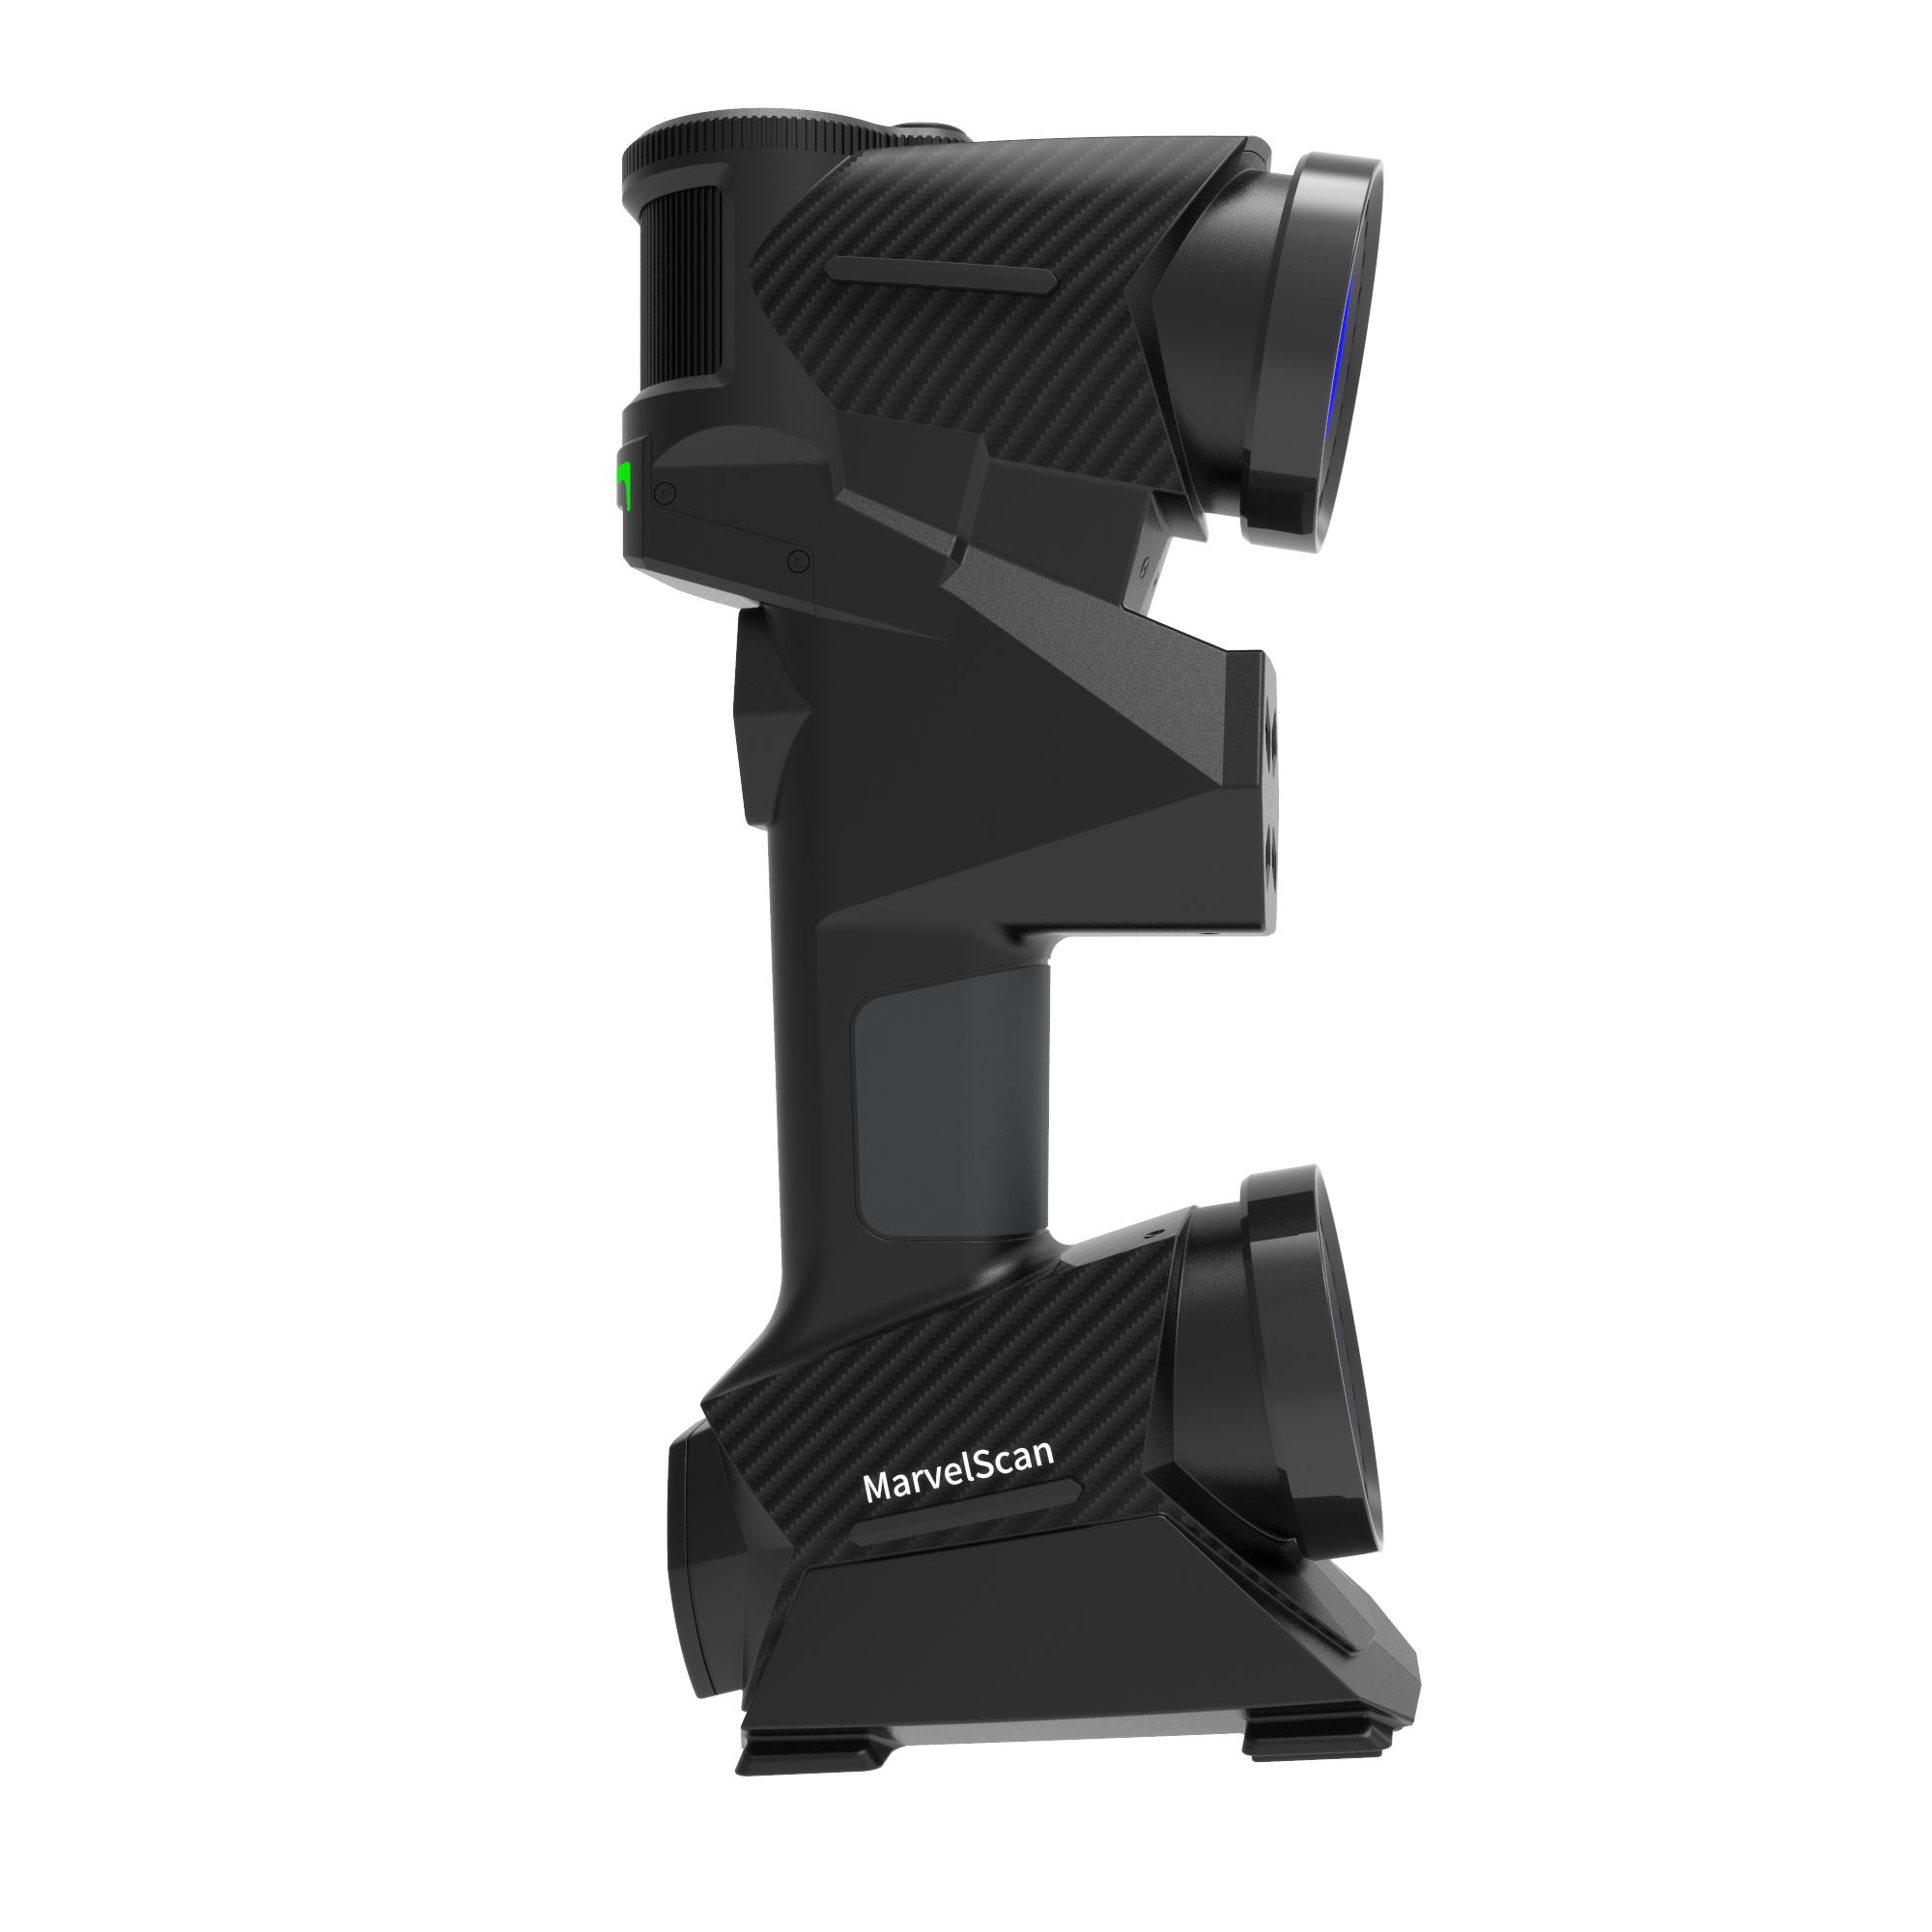 MarvelScan Tracker Free Marker Free 3D Laser Scanner with Independent Built-in Photogrammetry